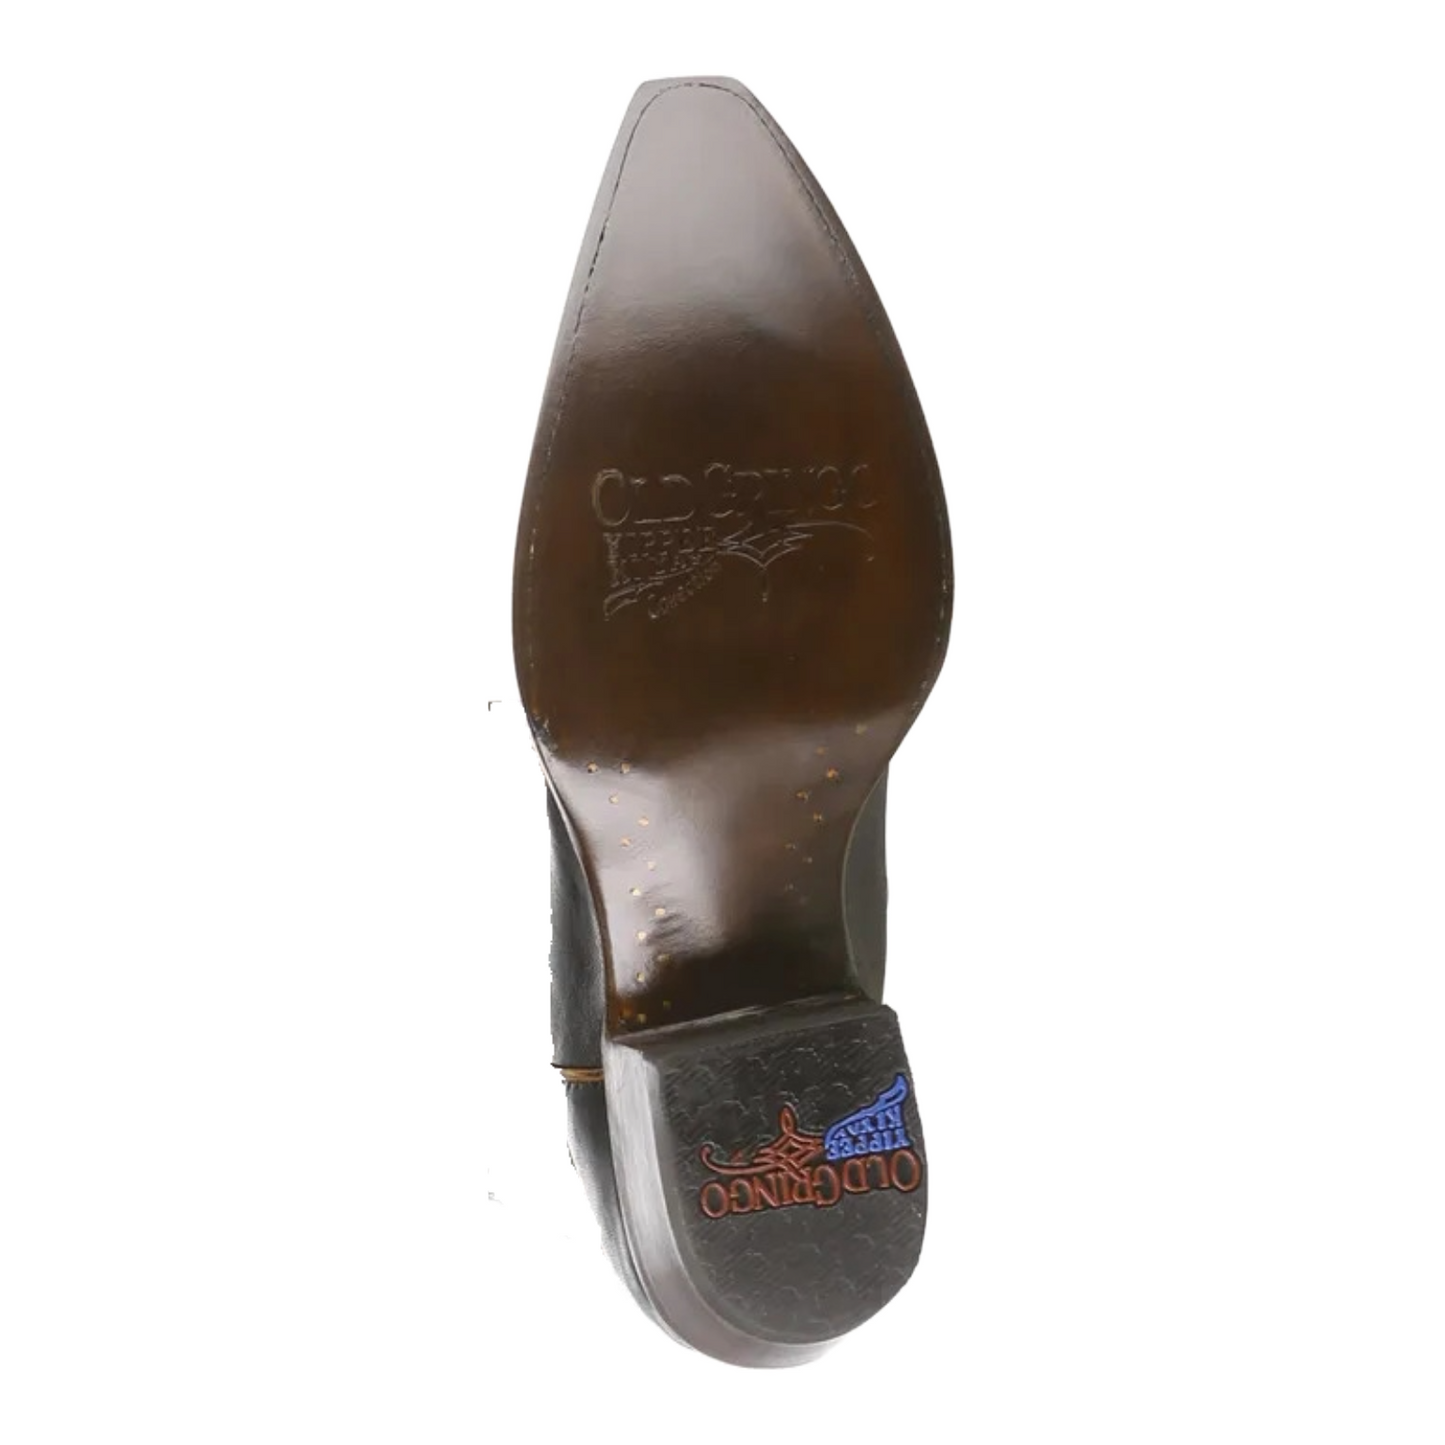 Old Gringo Ladies Karmina Stud Black Snip Toe Western Boots YL614-2